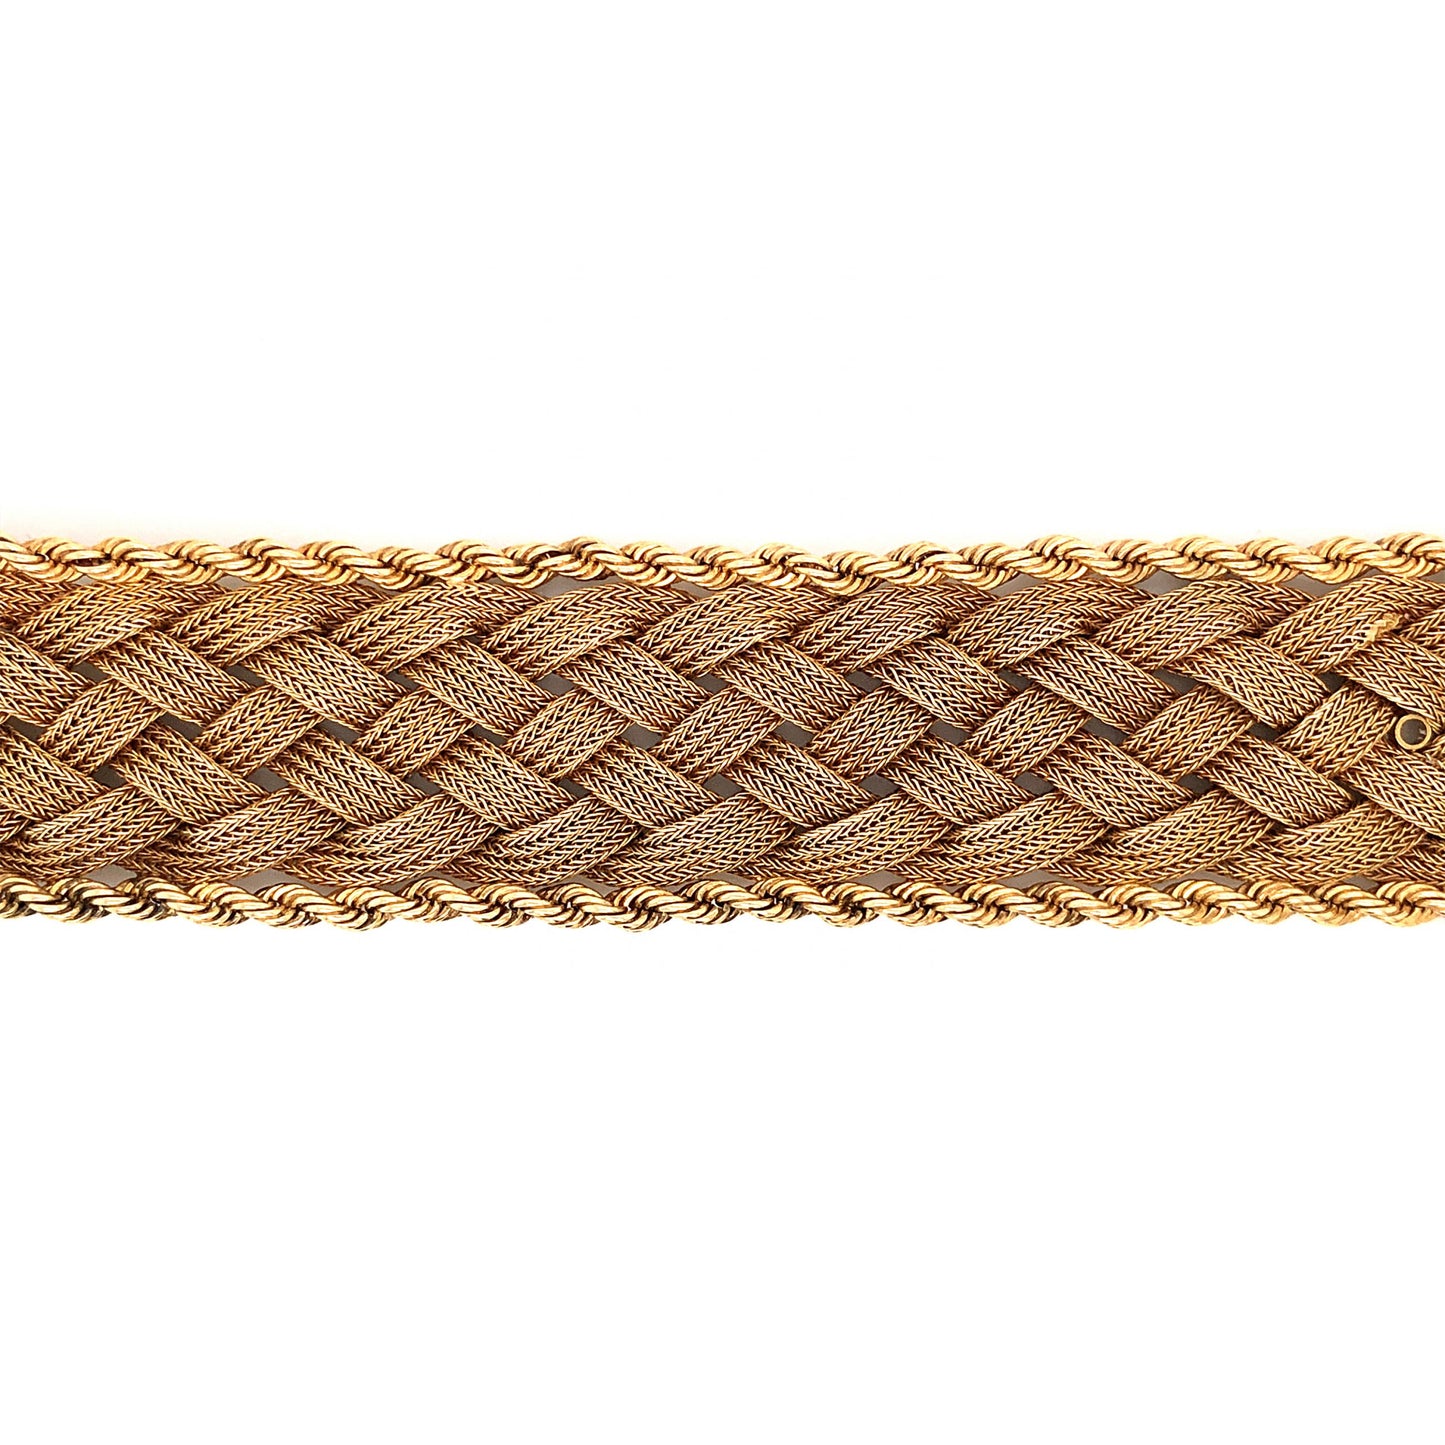 Mid-Century Diamond & Sapphire Bracelet in 14k Yellow Gold